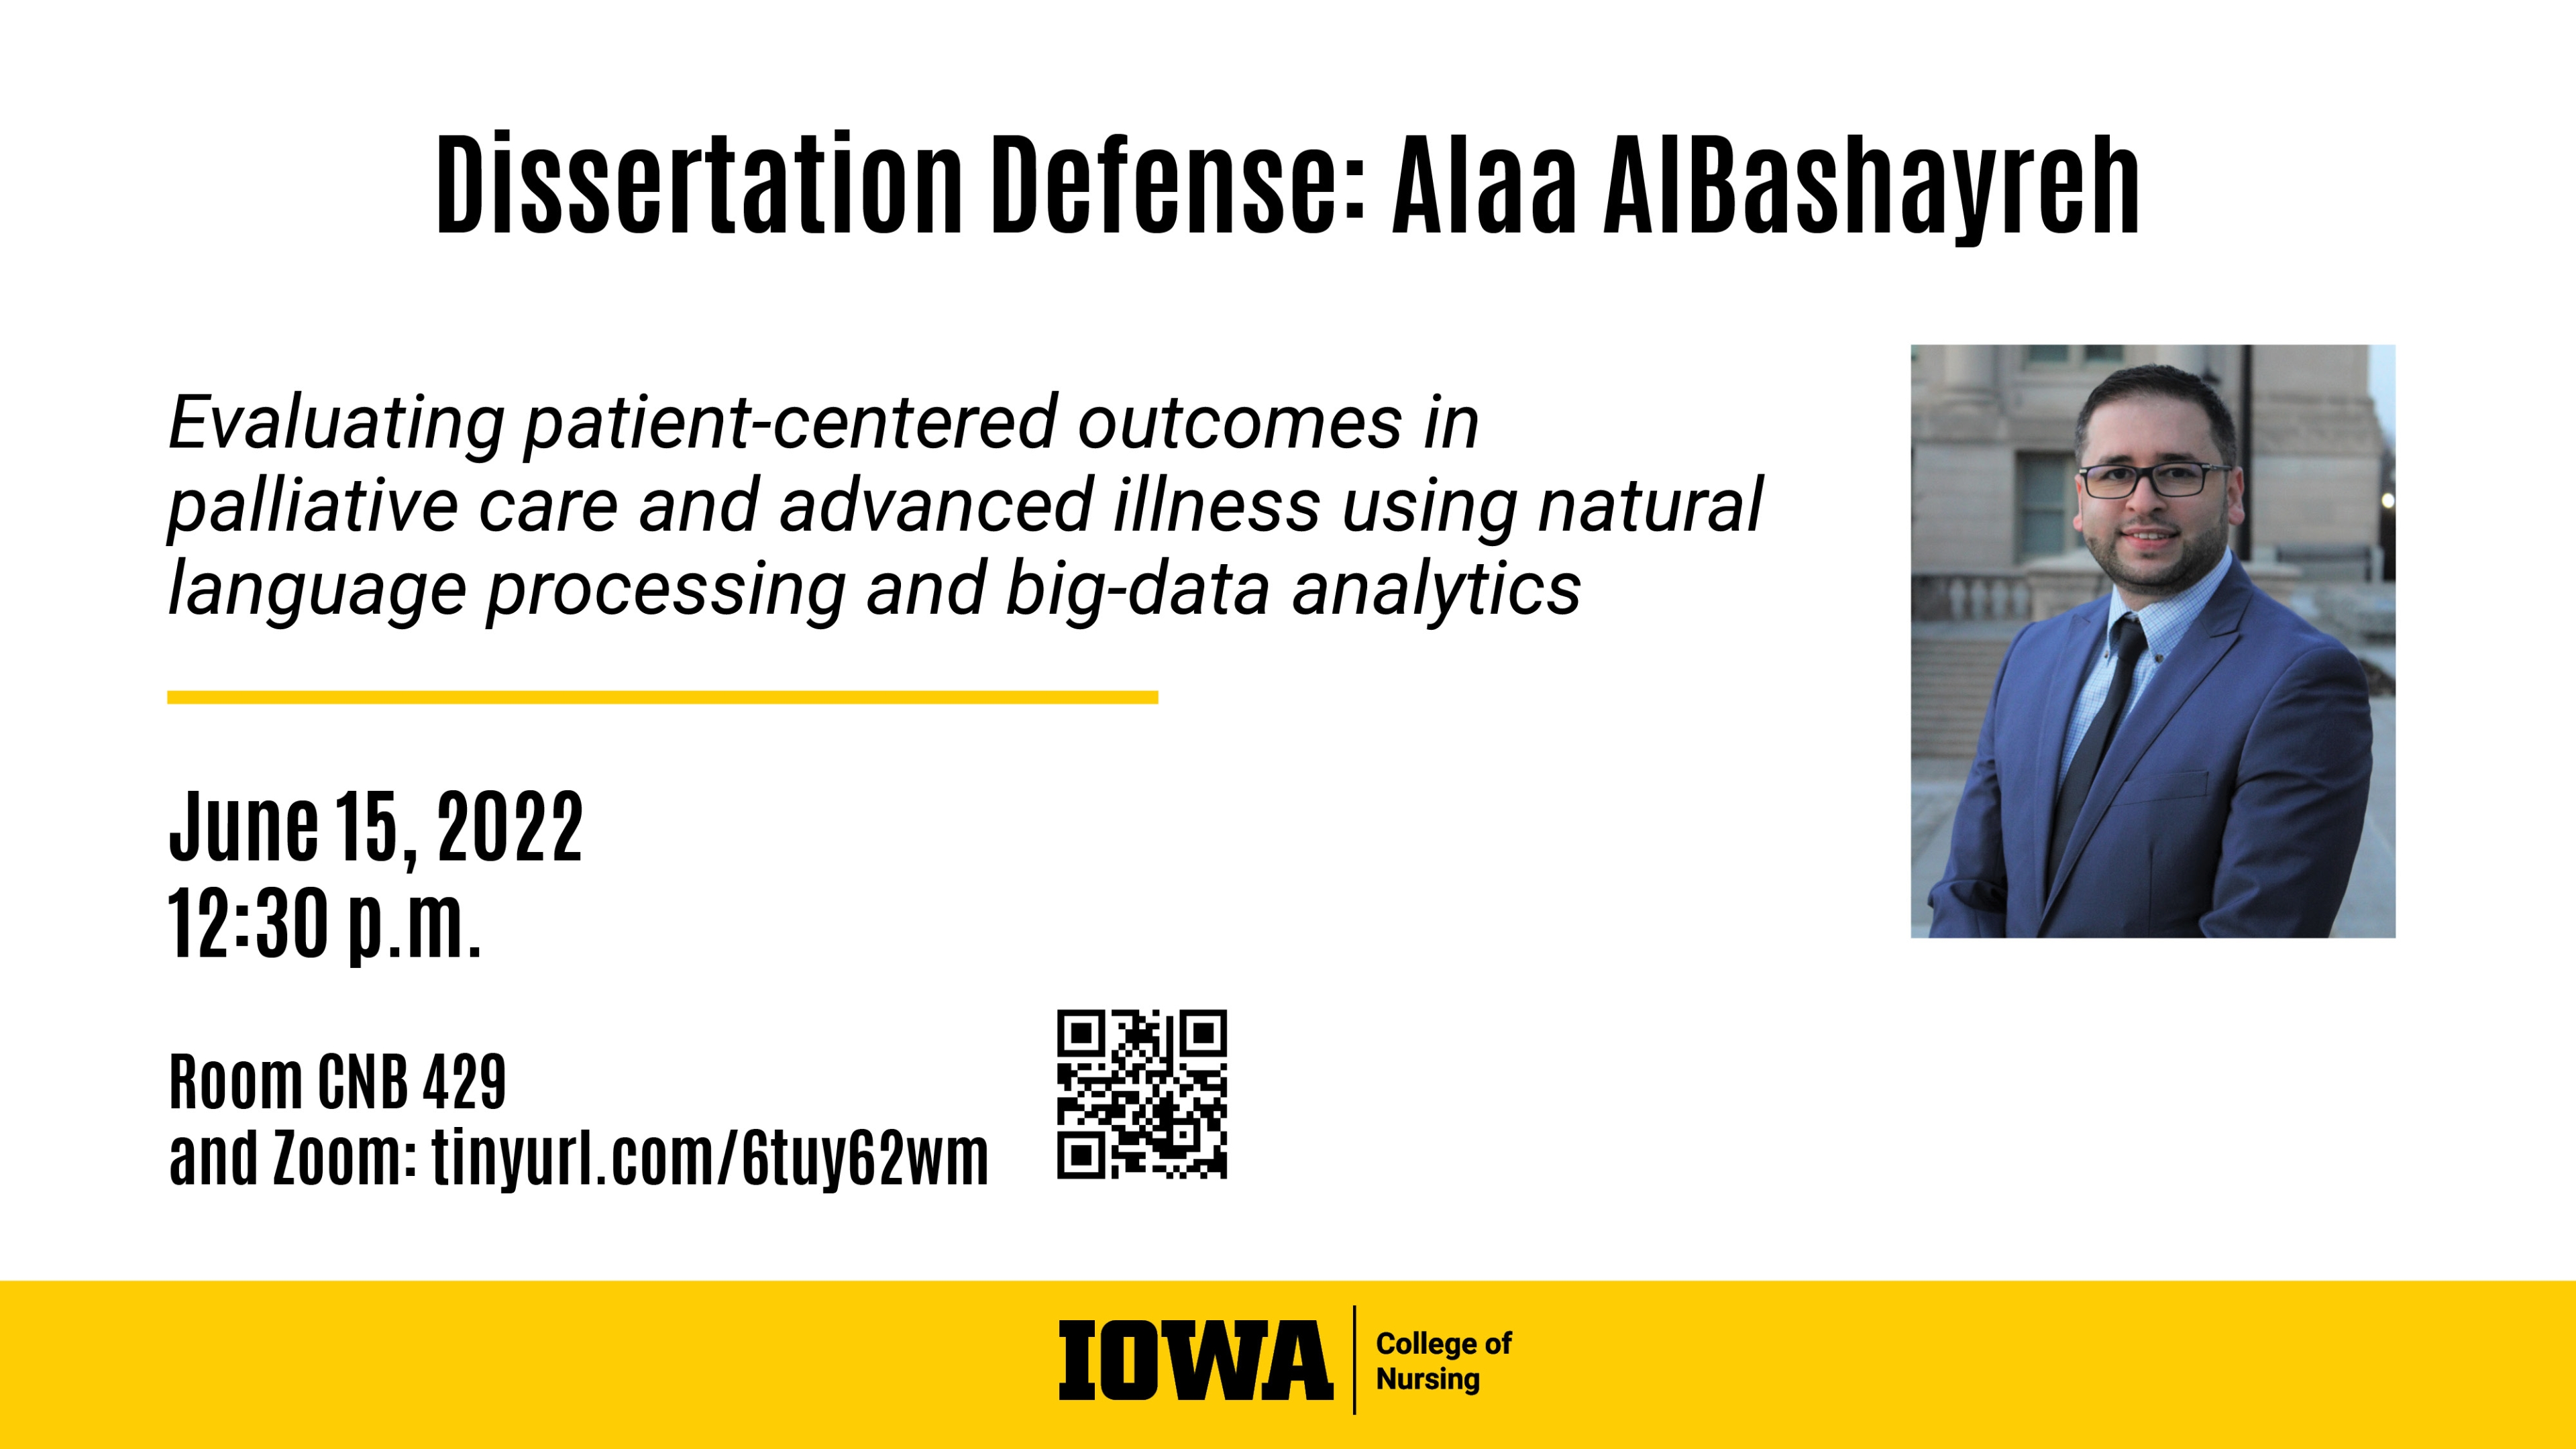 Dissertation Defense, Alaa AlBashayreh, June 15, 2022, 12:30 pm, 429 CNB and via Zoom https://uiowa.zoom.us/j/97262830299?pwd=MUtmREhDUFI2QkFQZVp2T2RGN043QT09&from=addon 